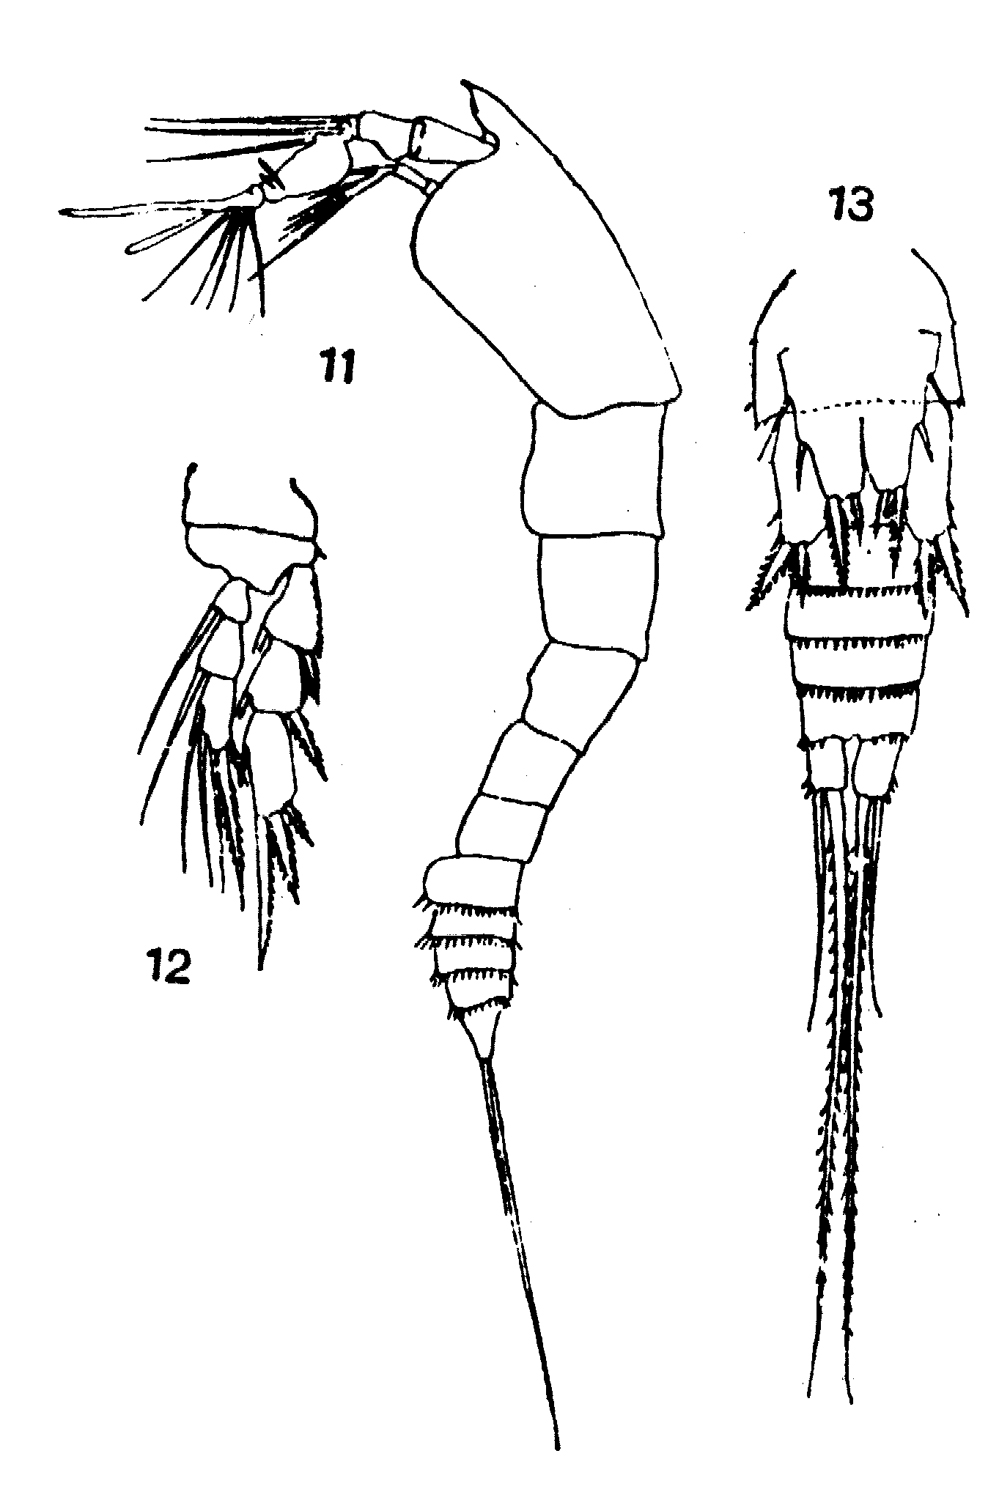 Species Euterpina acutifrons - Plate 9 of morphological figures